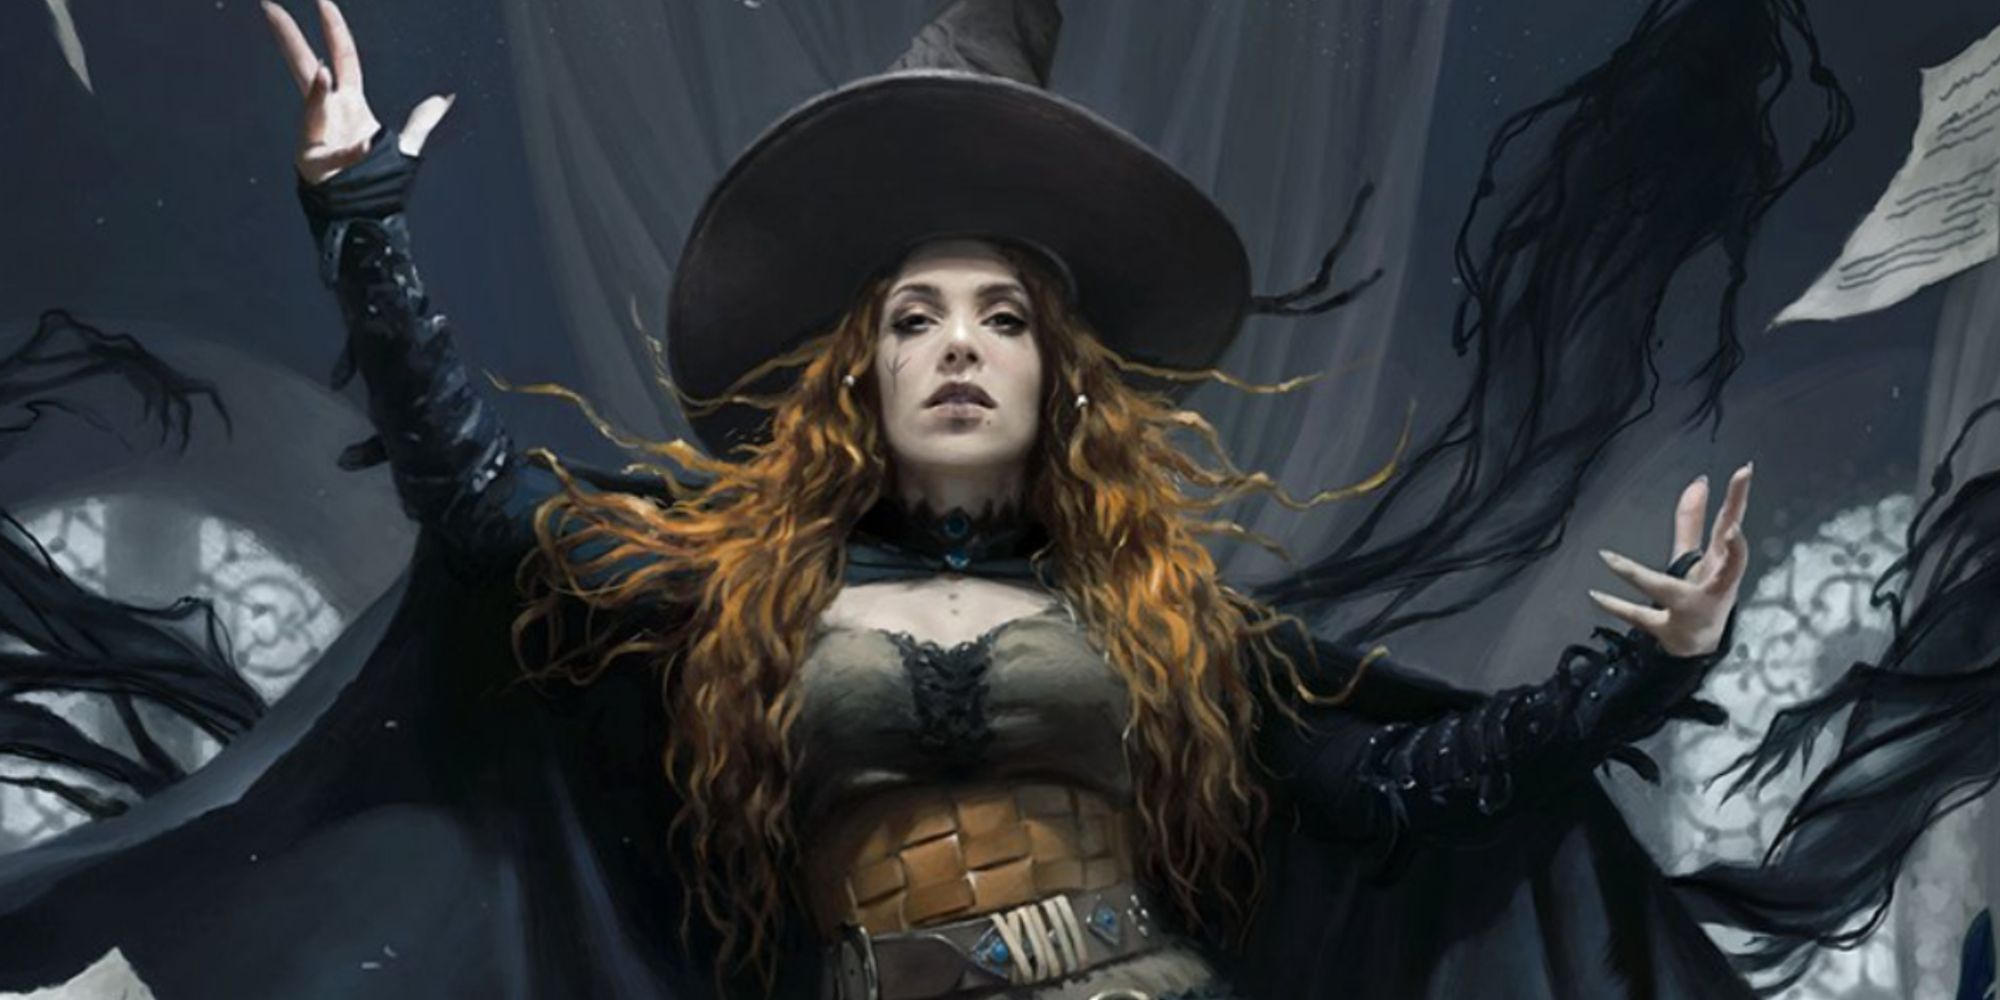 Tasha, the Witch Queen by Martina Fačková